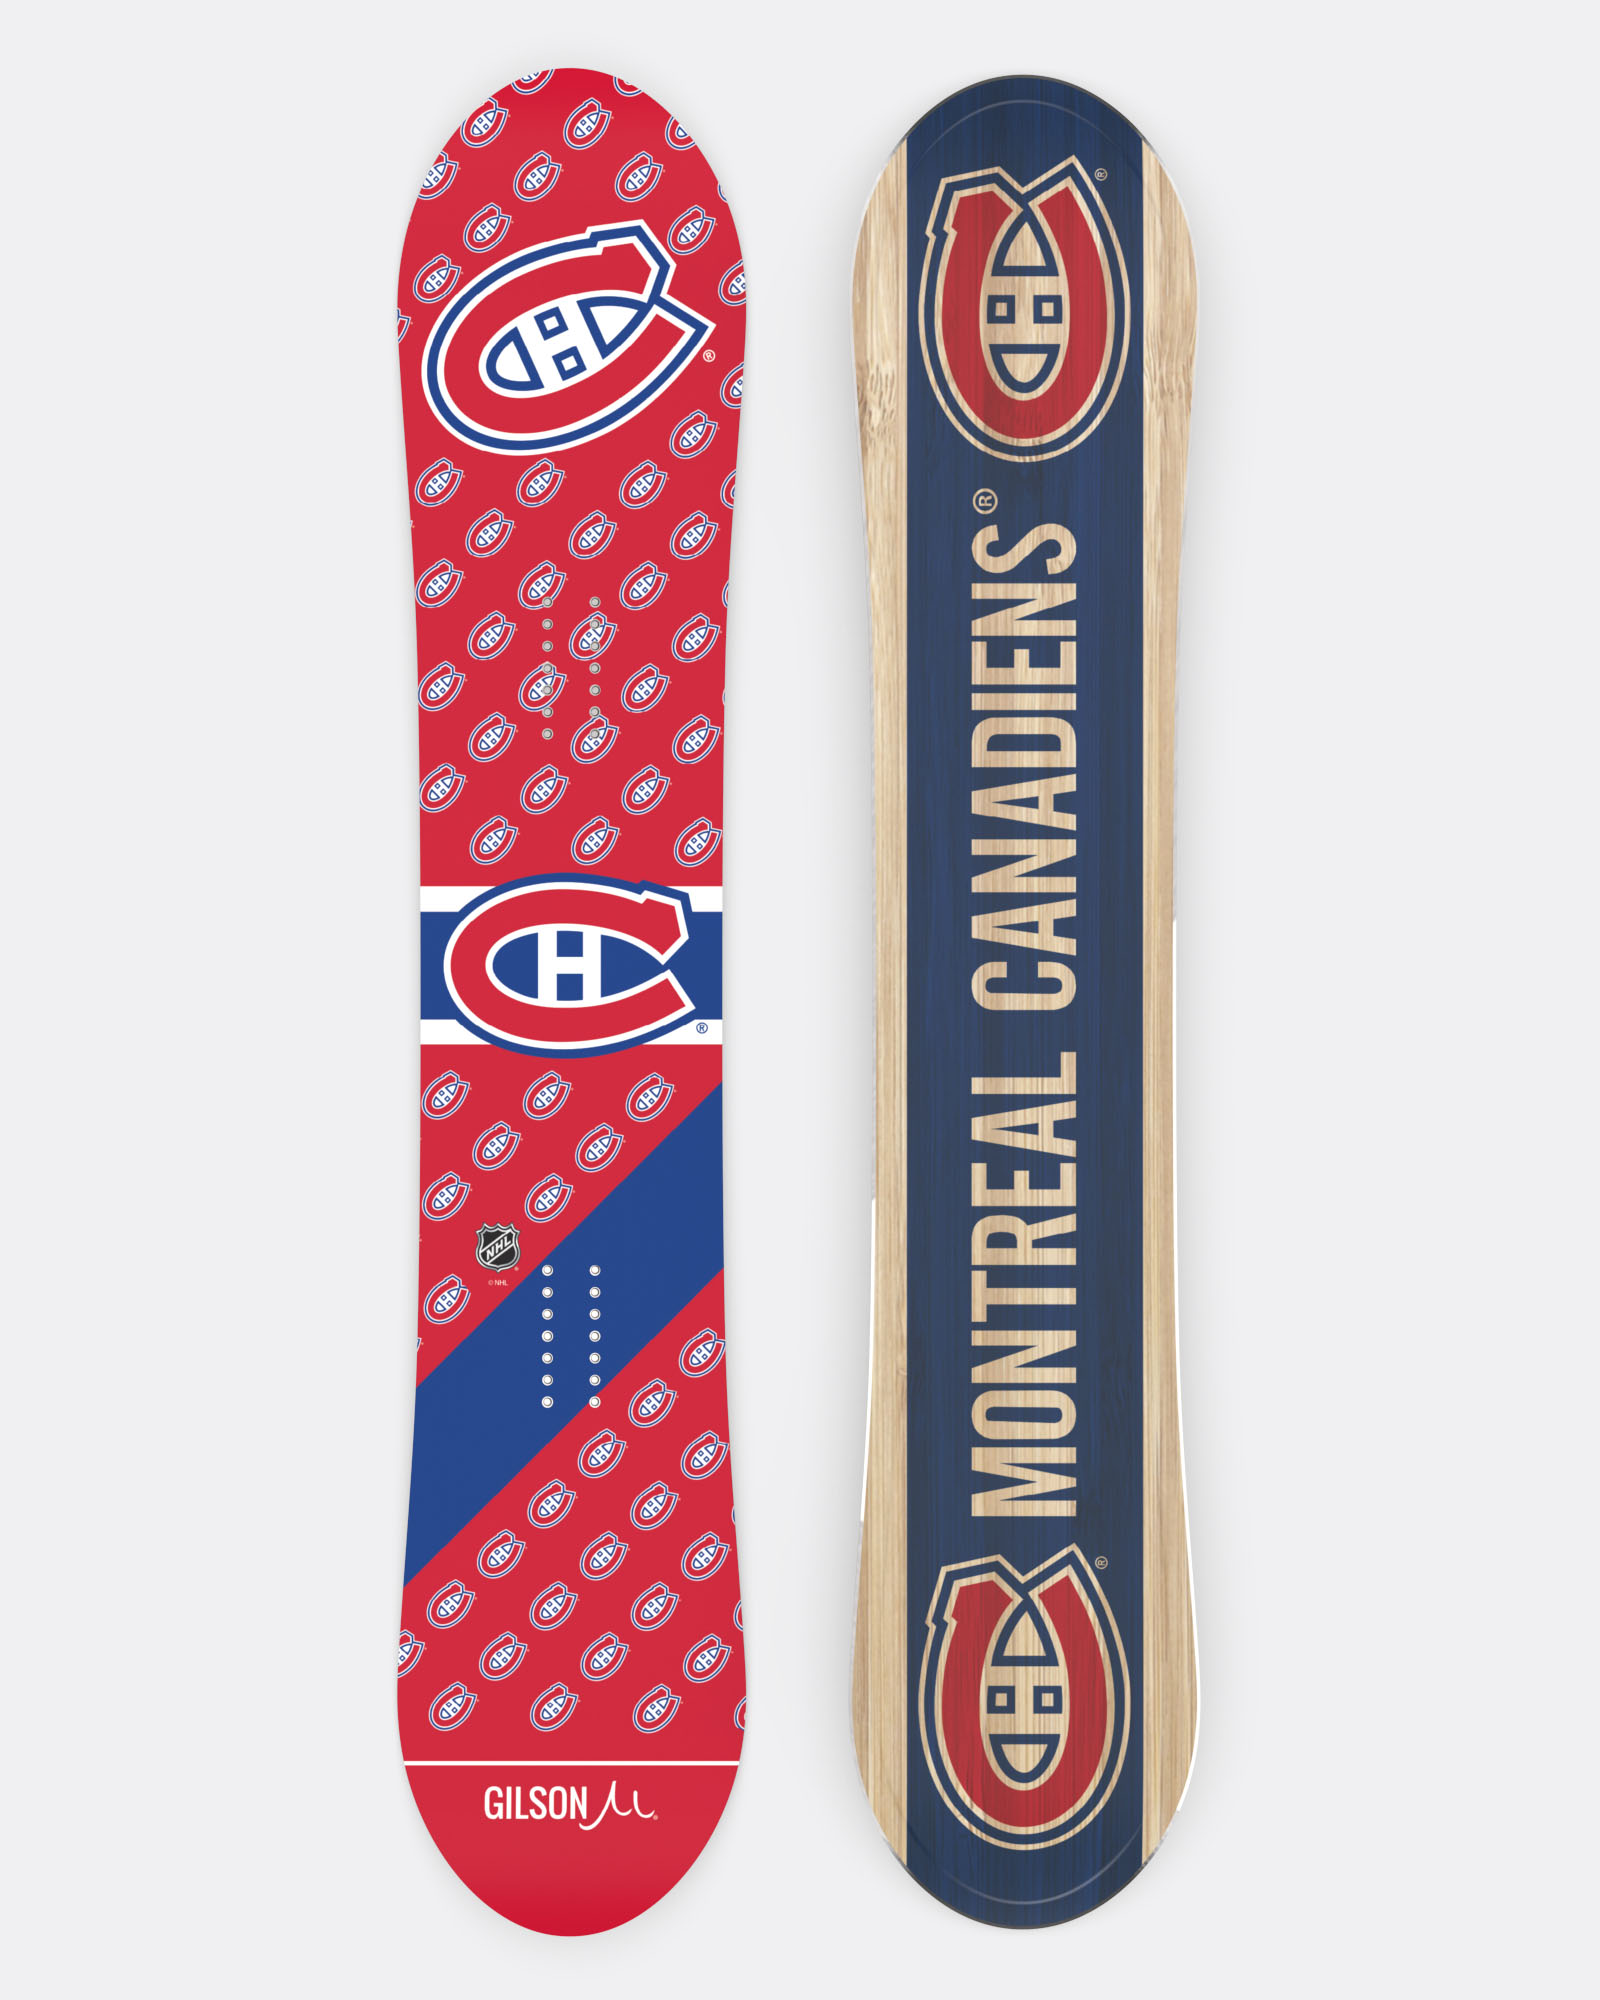 Montreal Canadiens graphics